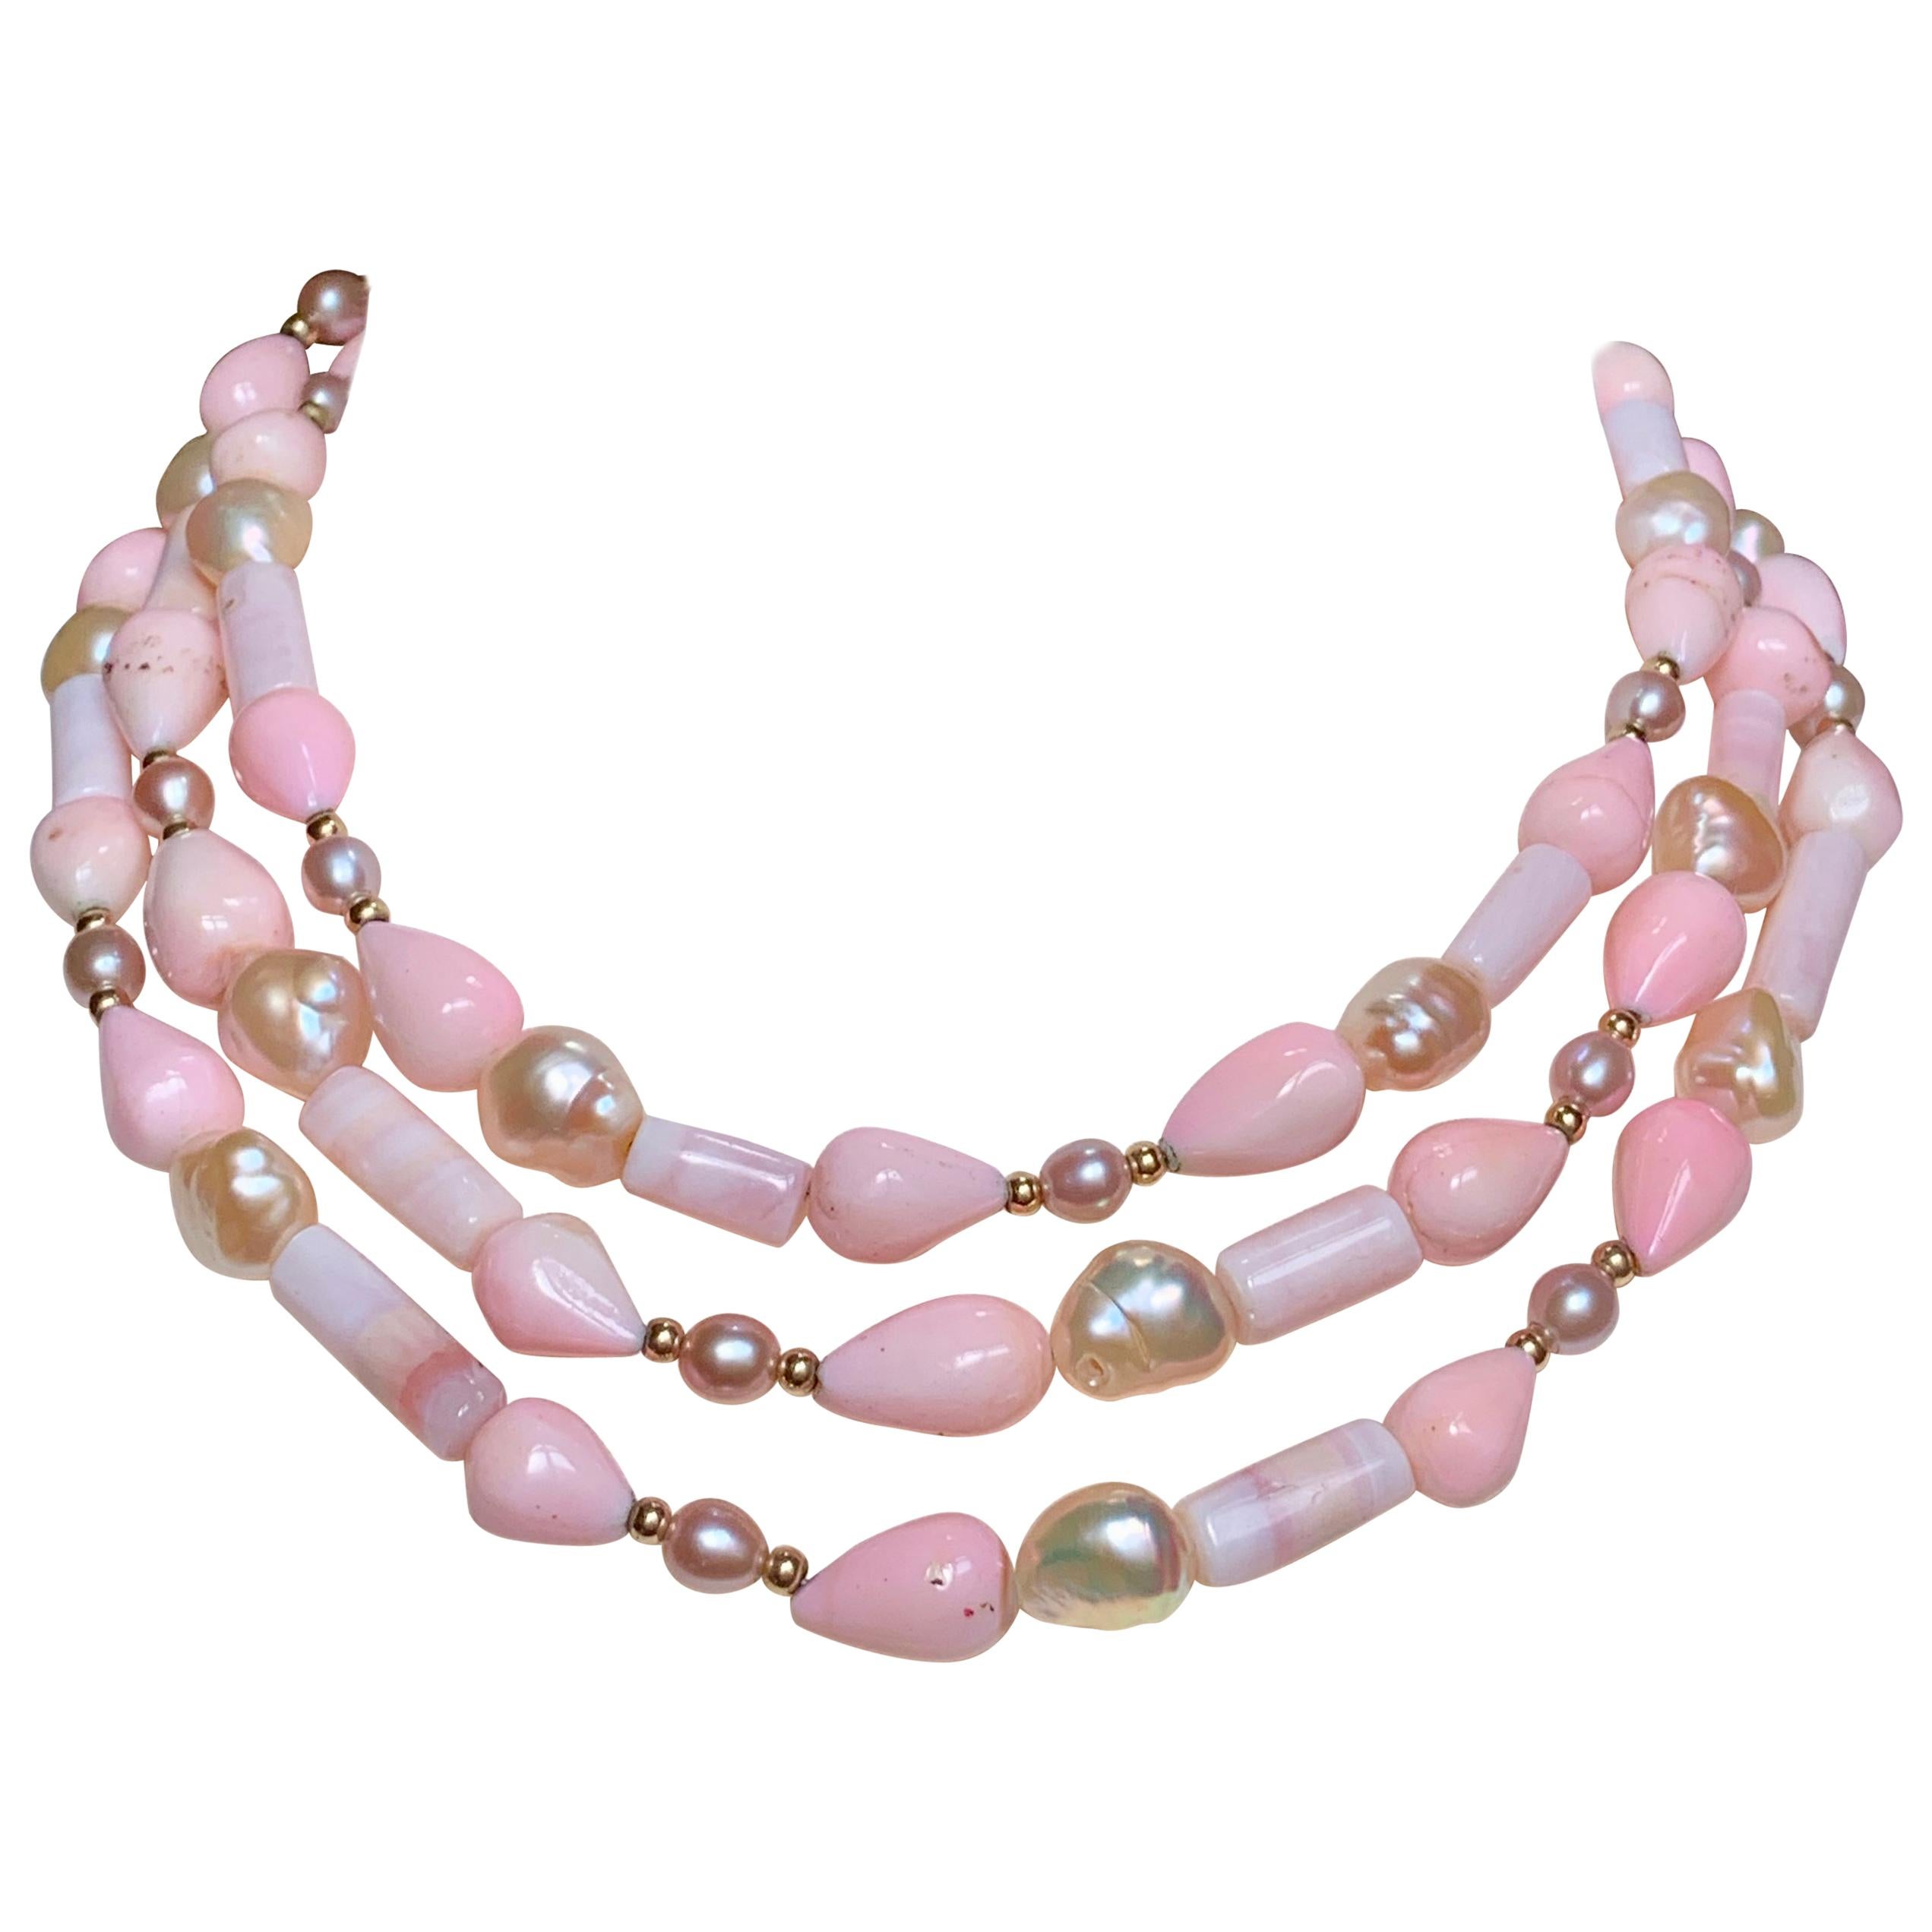 53" Long Peruvian Pink Opal Necklace with 14 Karat Gold Details